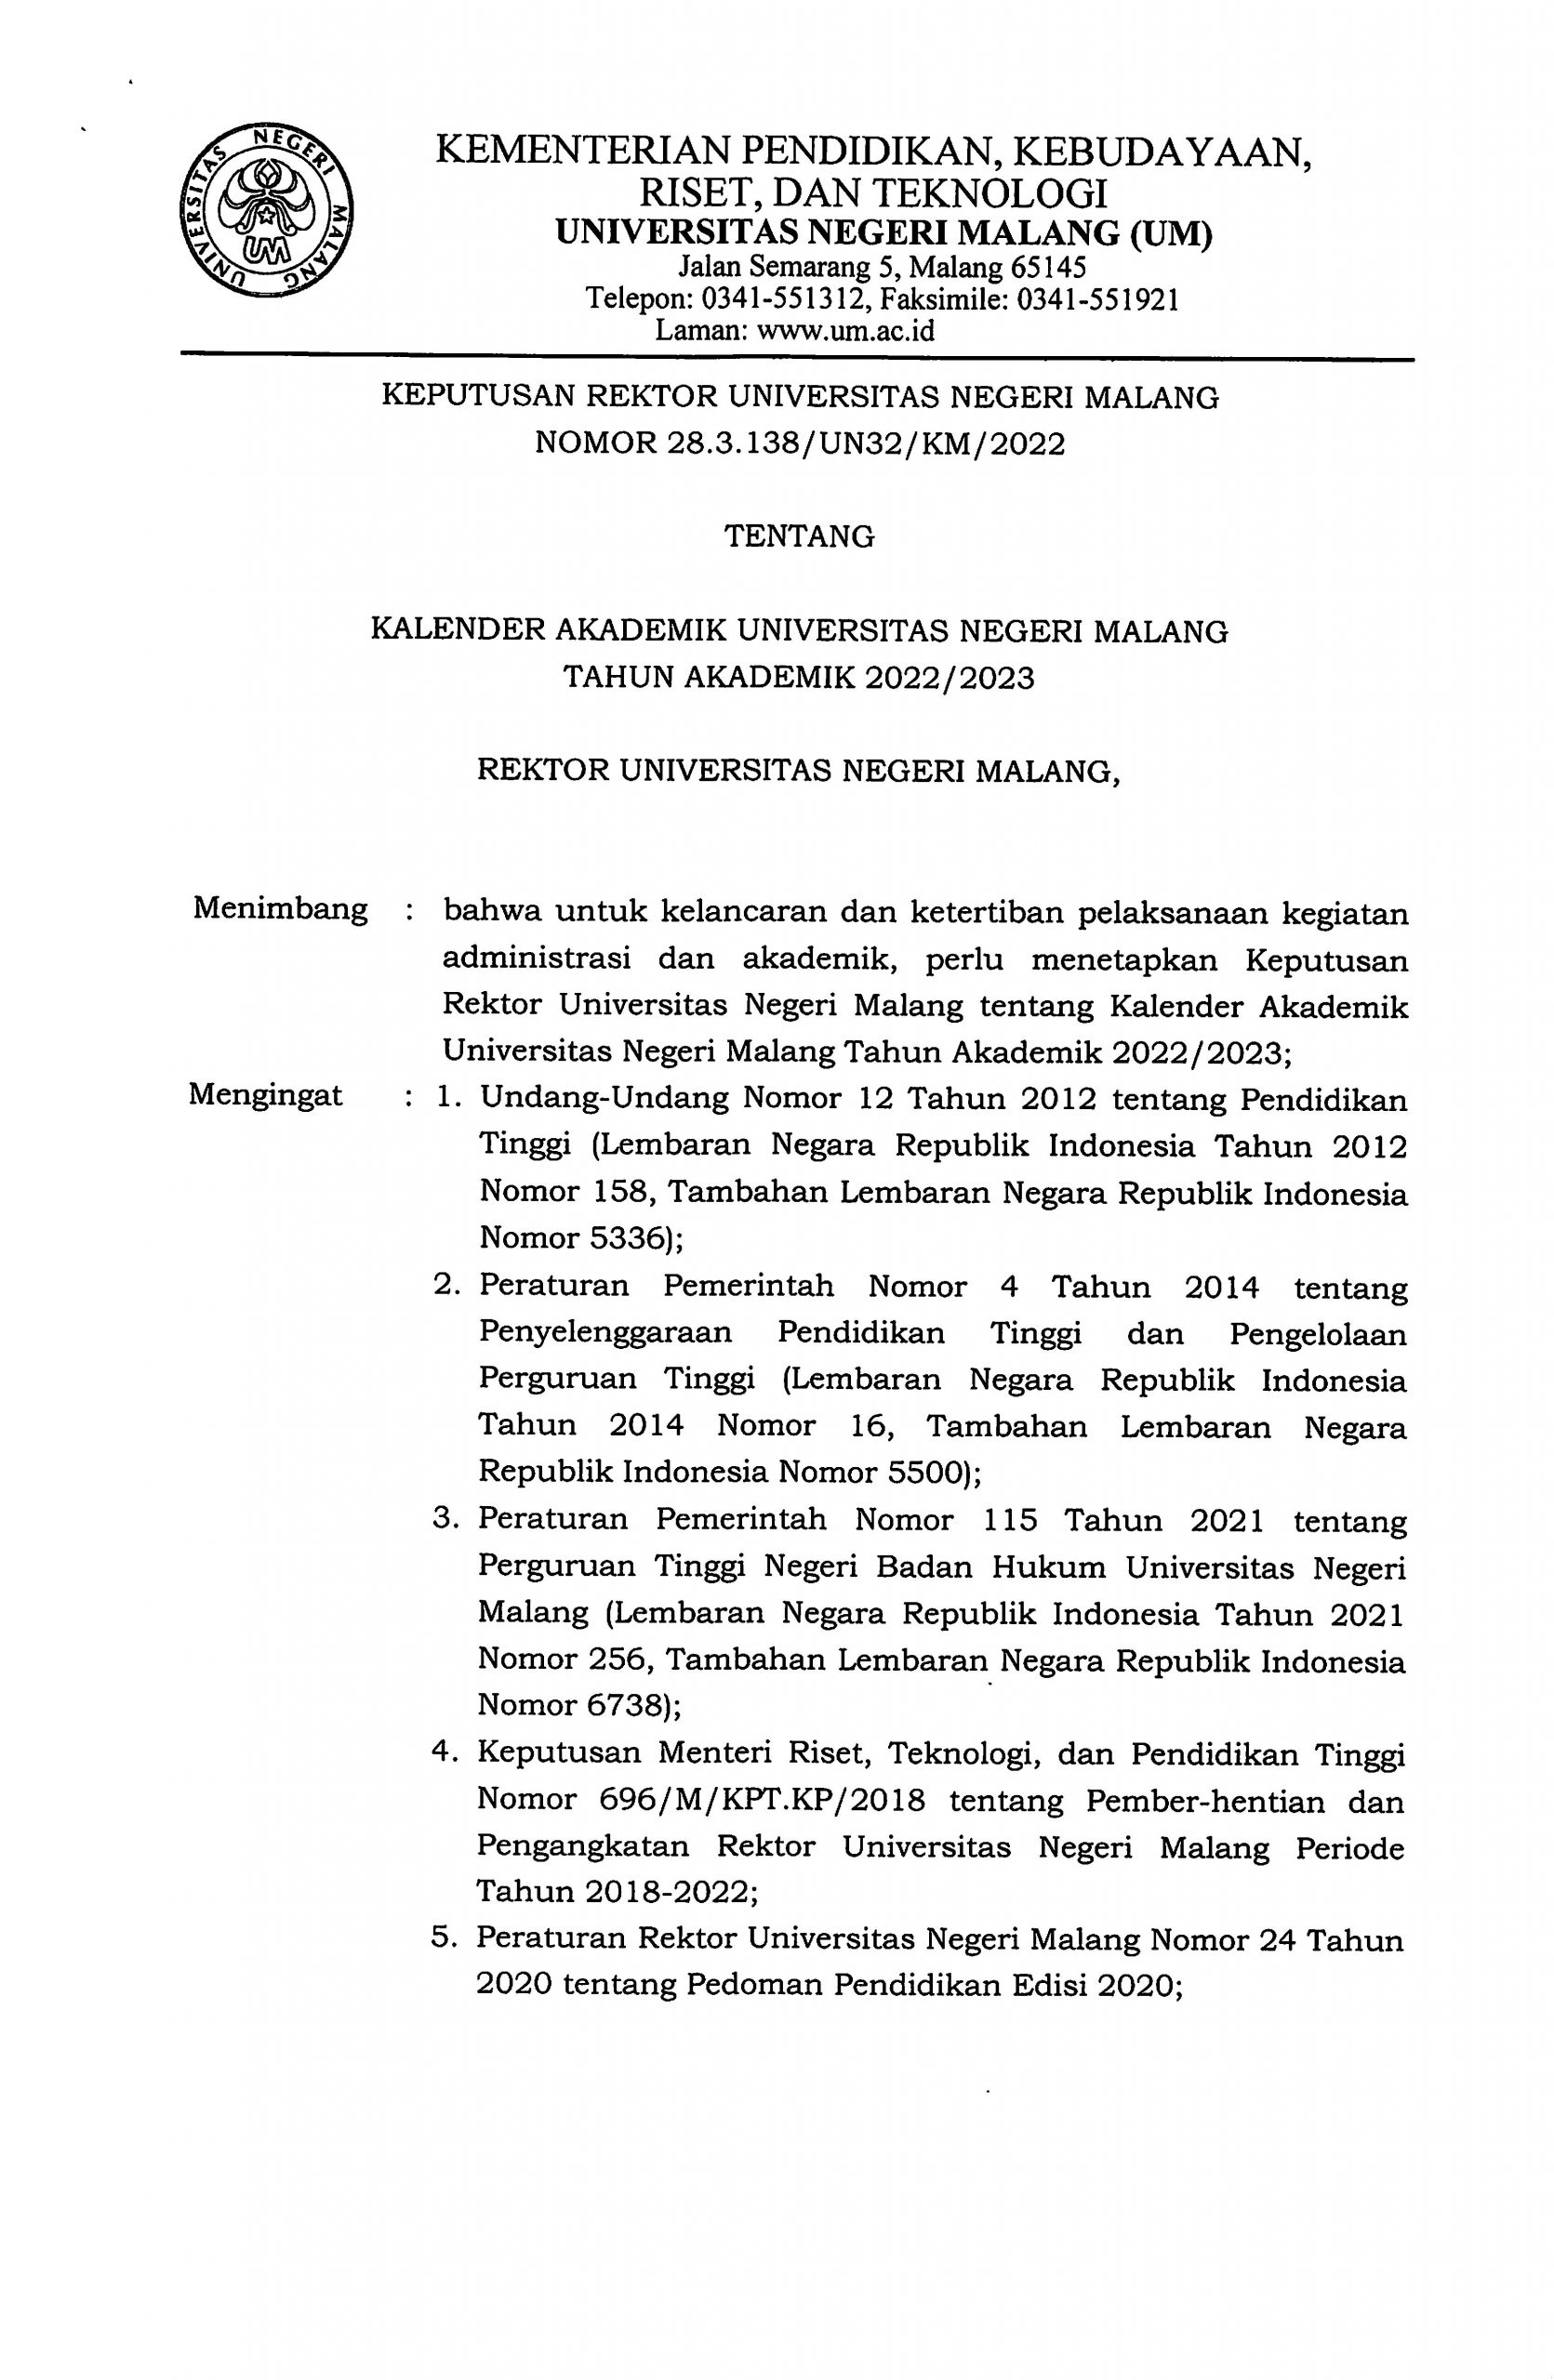 Kalender Akademik Universitas Negeri Malang Tahun Akademik 2022/2023